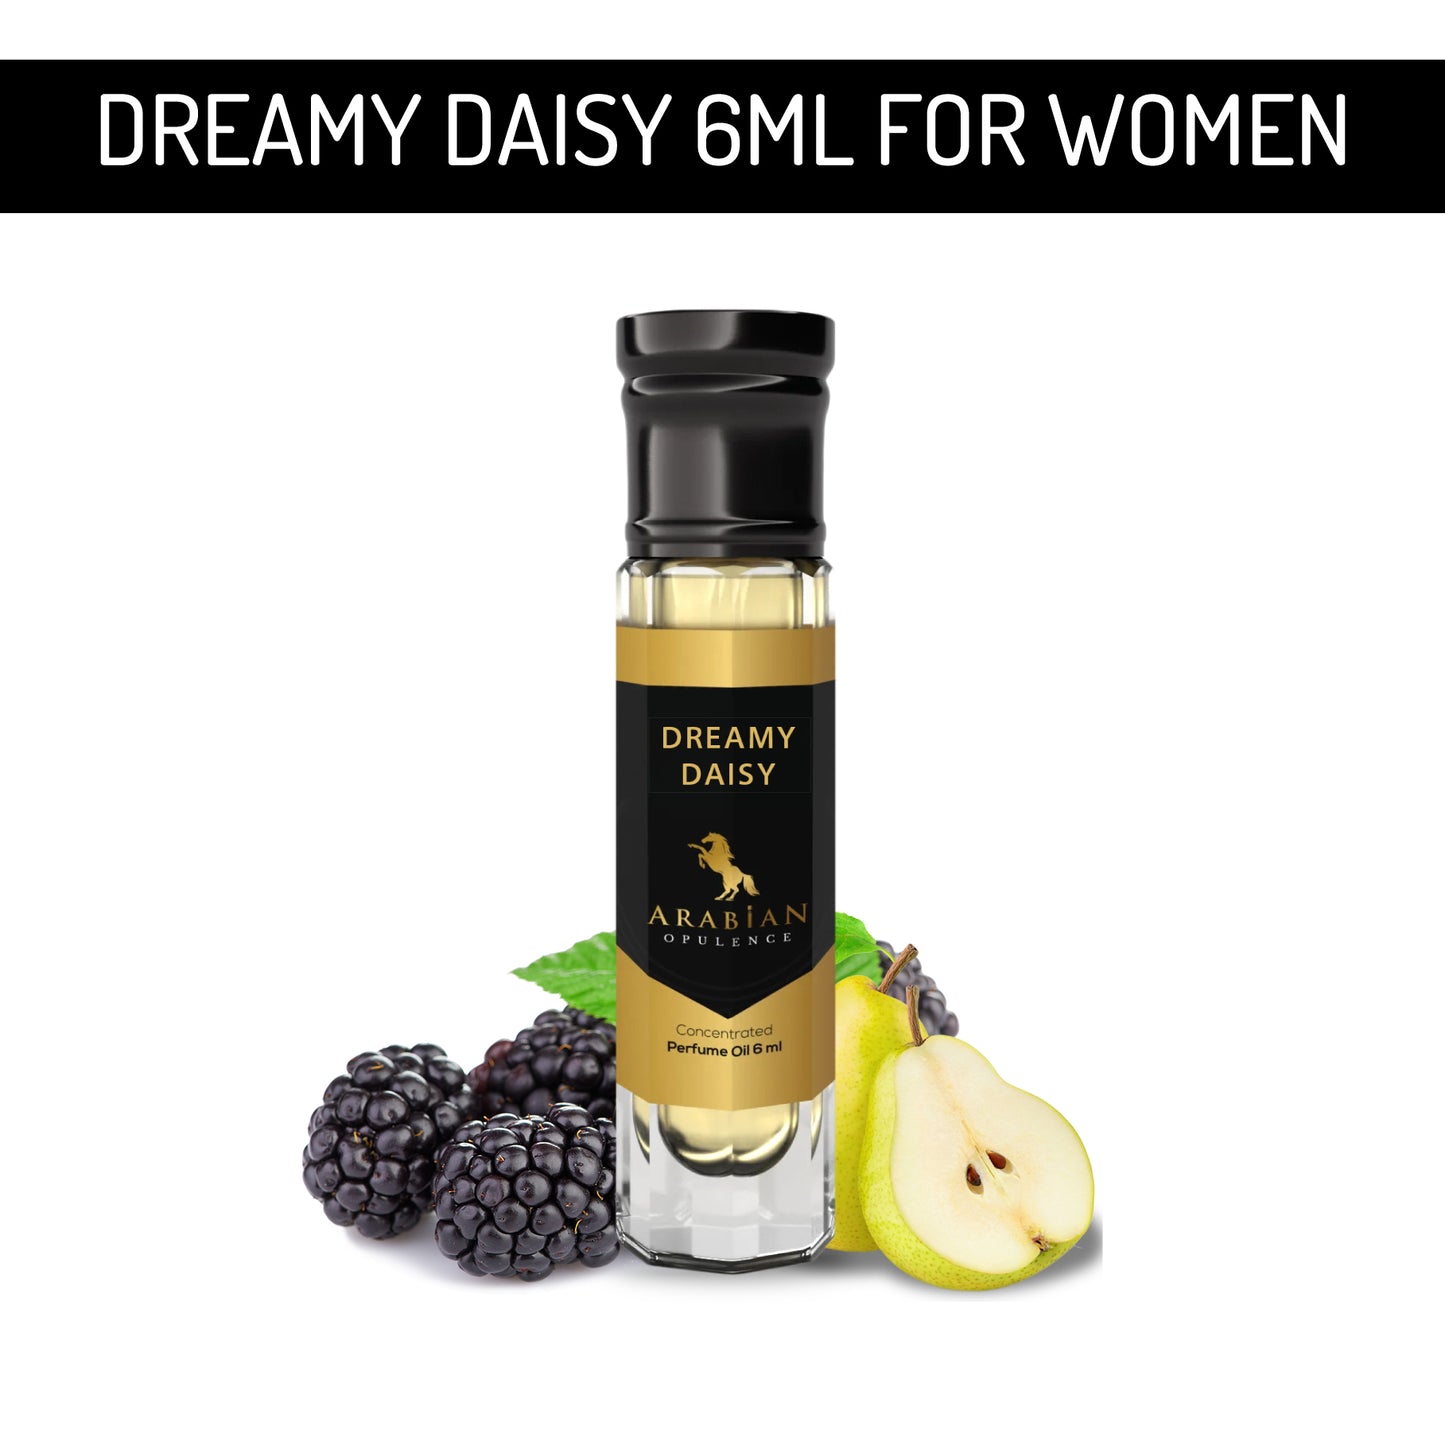 FR87 DREAMY DAISY W - Perfume Body Oil - Alcohol Free